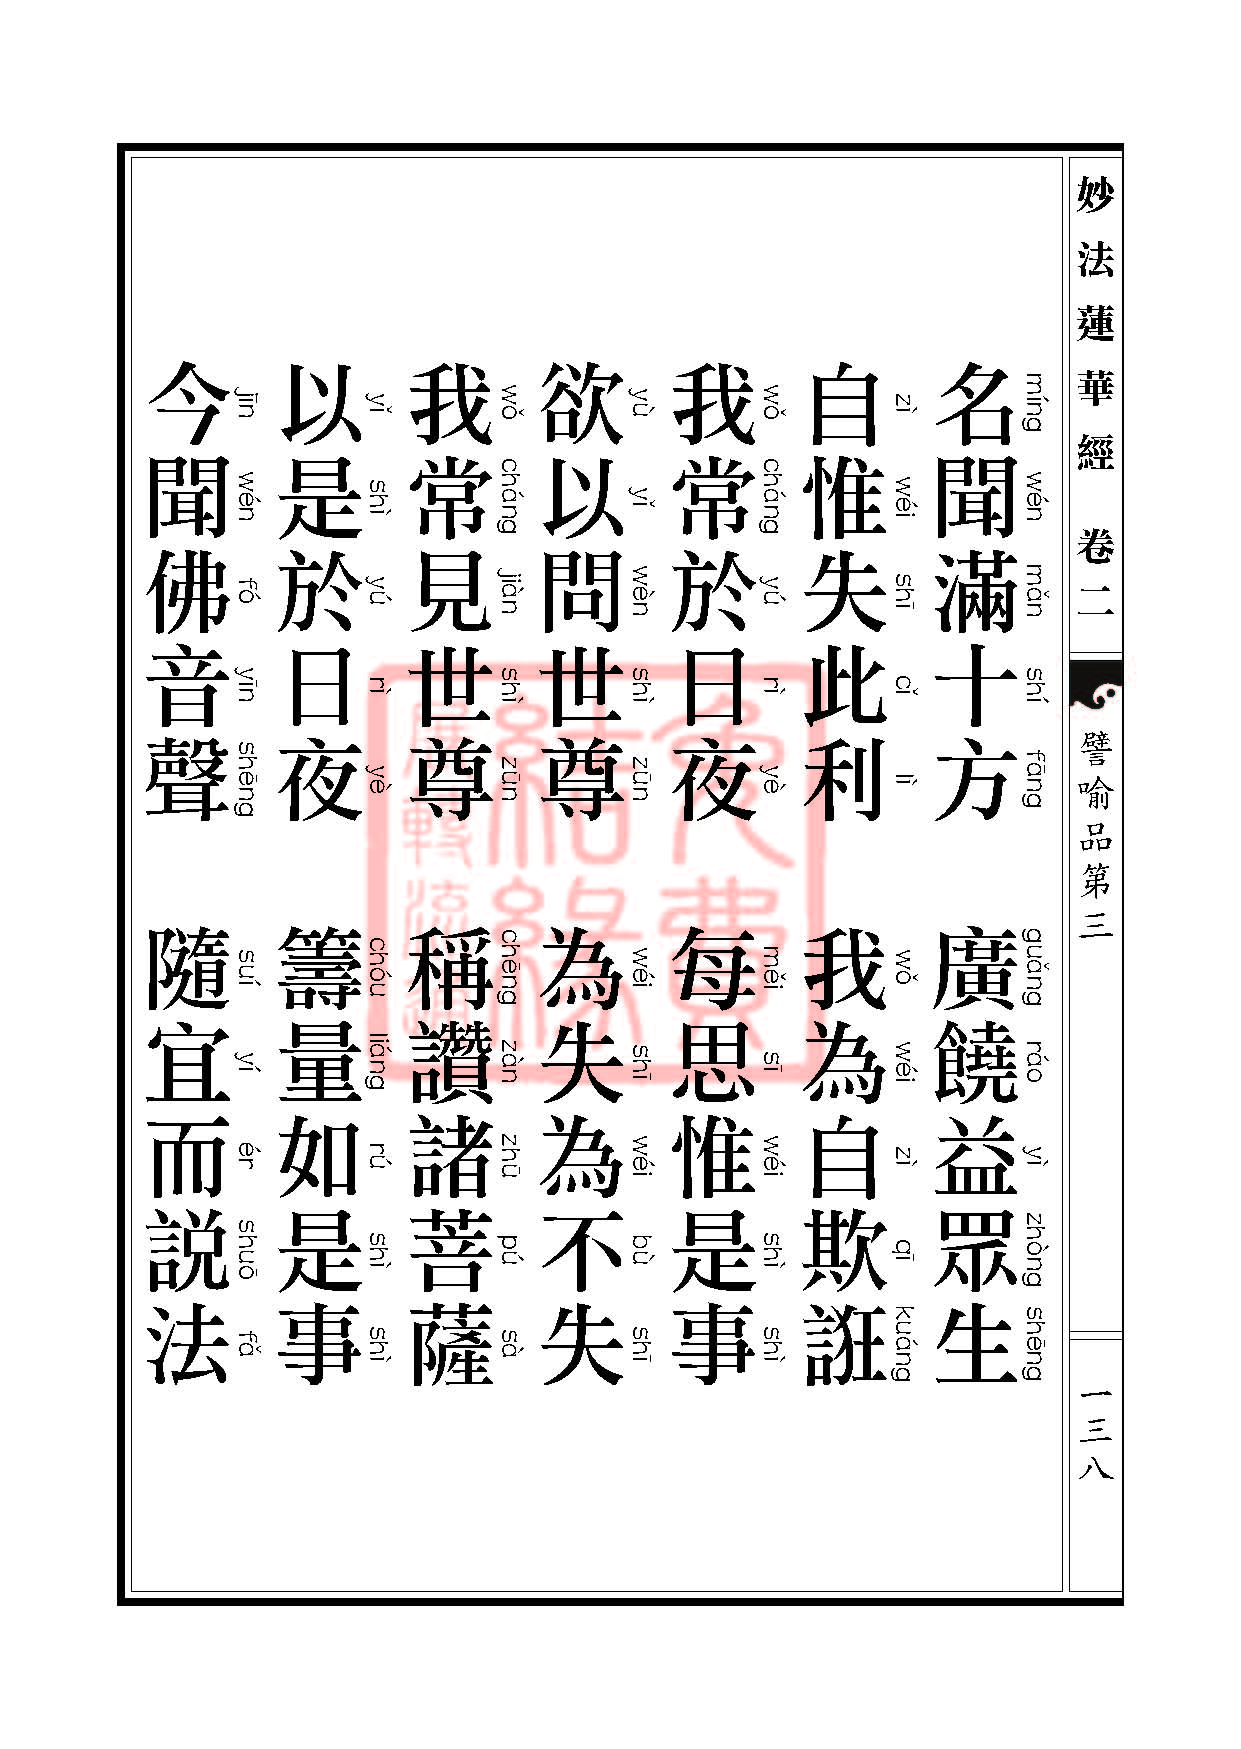 Book_FHJ_HK-A6-PY_Web_ҳ_138.jpg